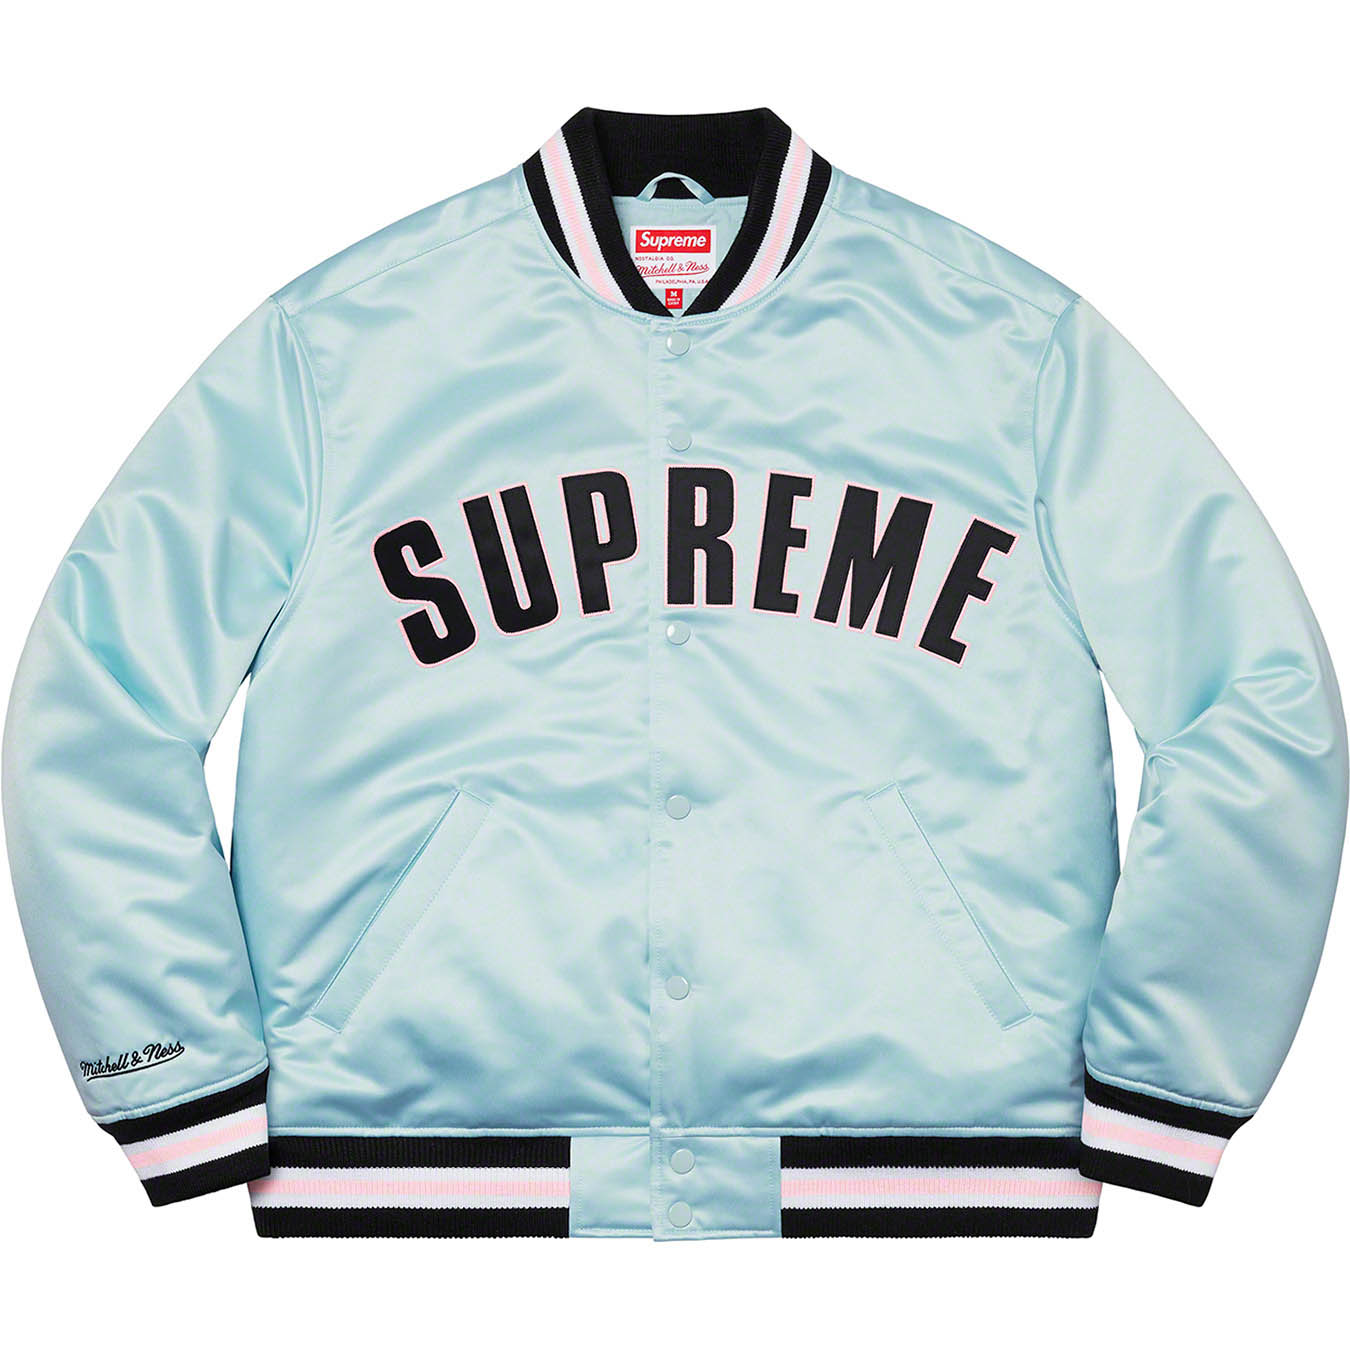 Supreme Supreme®/Mitchell & Ness® Satin Varsity Jacket